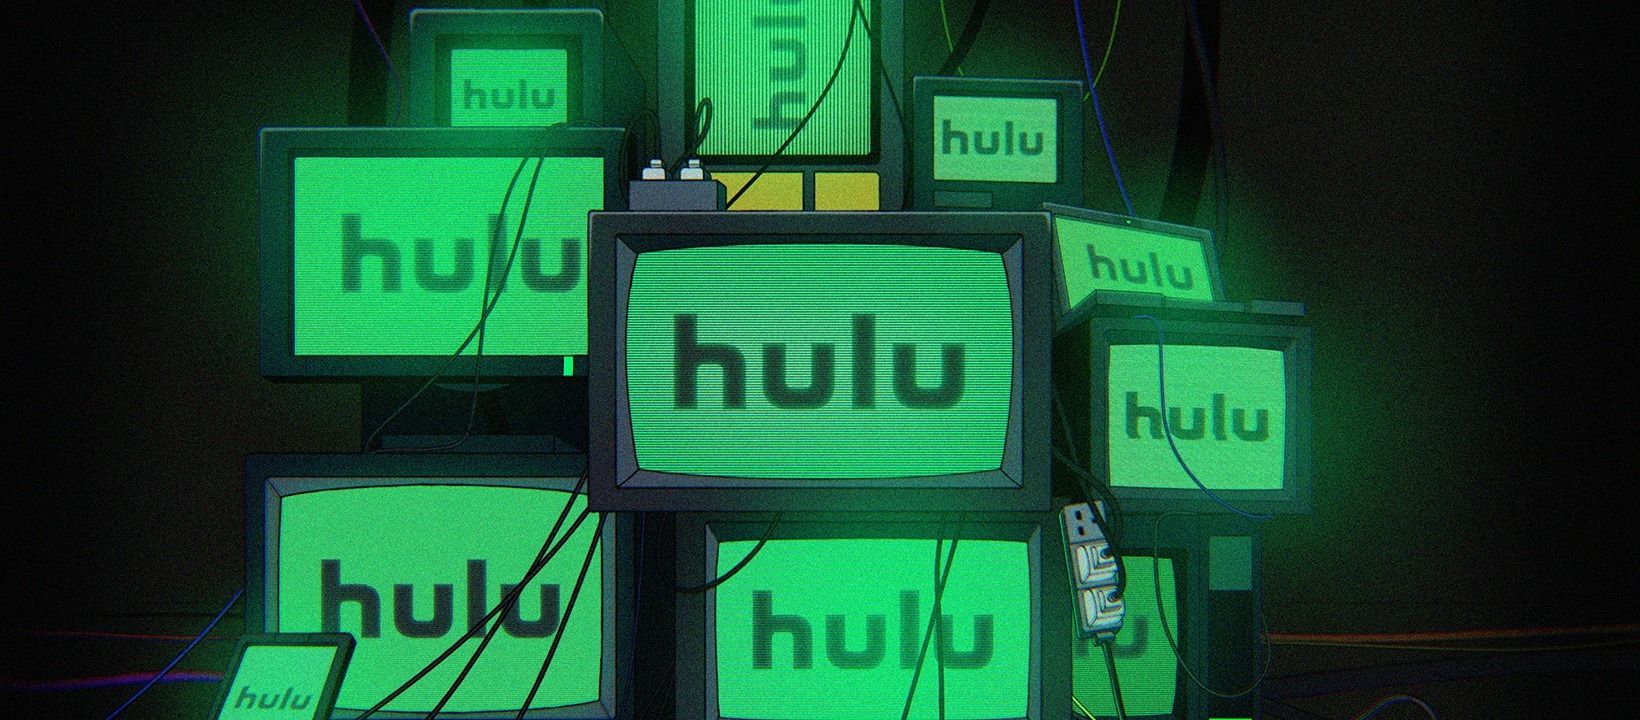 Hulu cover art depicting the hulu logo on several TVs